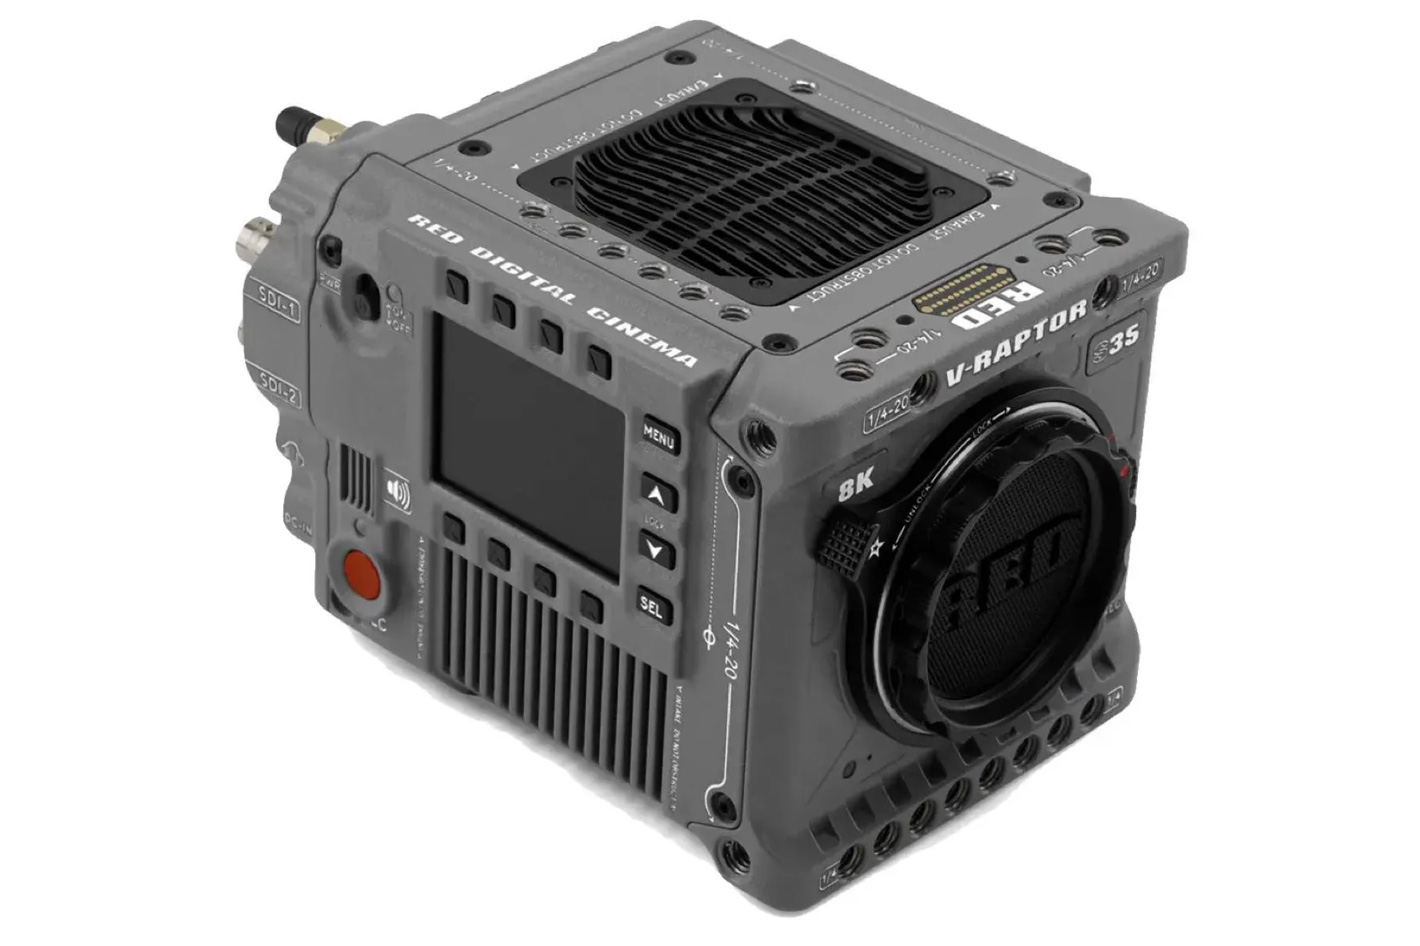 RHINO V-Raptor 8K S35 camera: a V-Raptor for Super 35